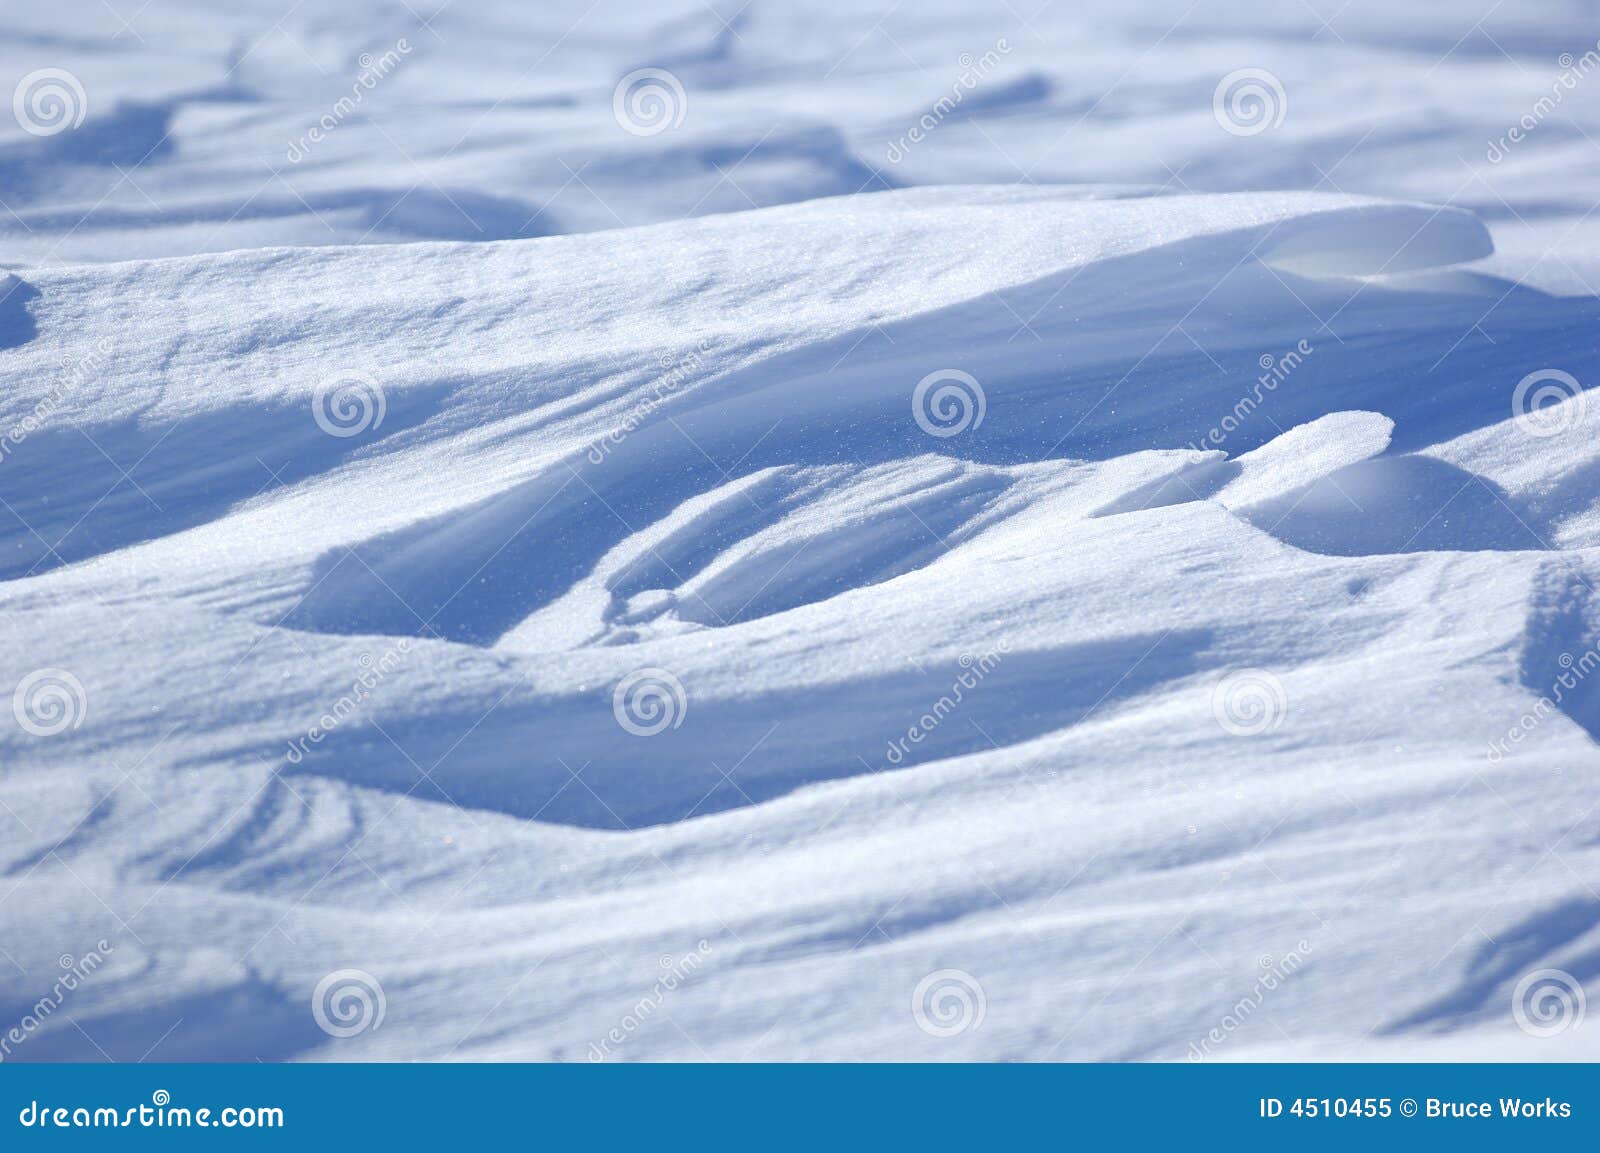 clipart snow drifts - photo #25